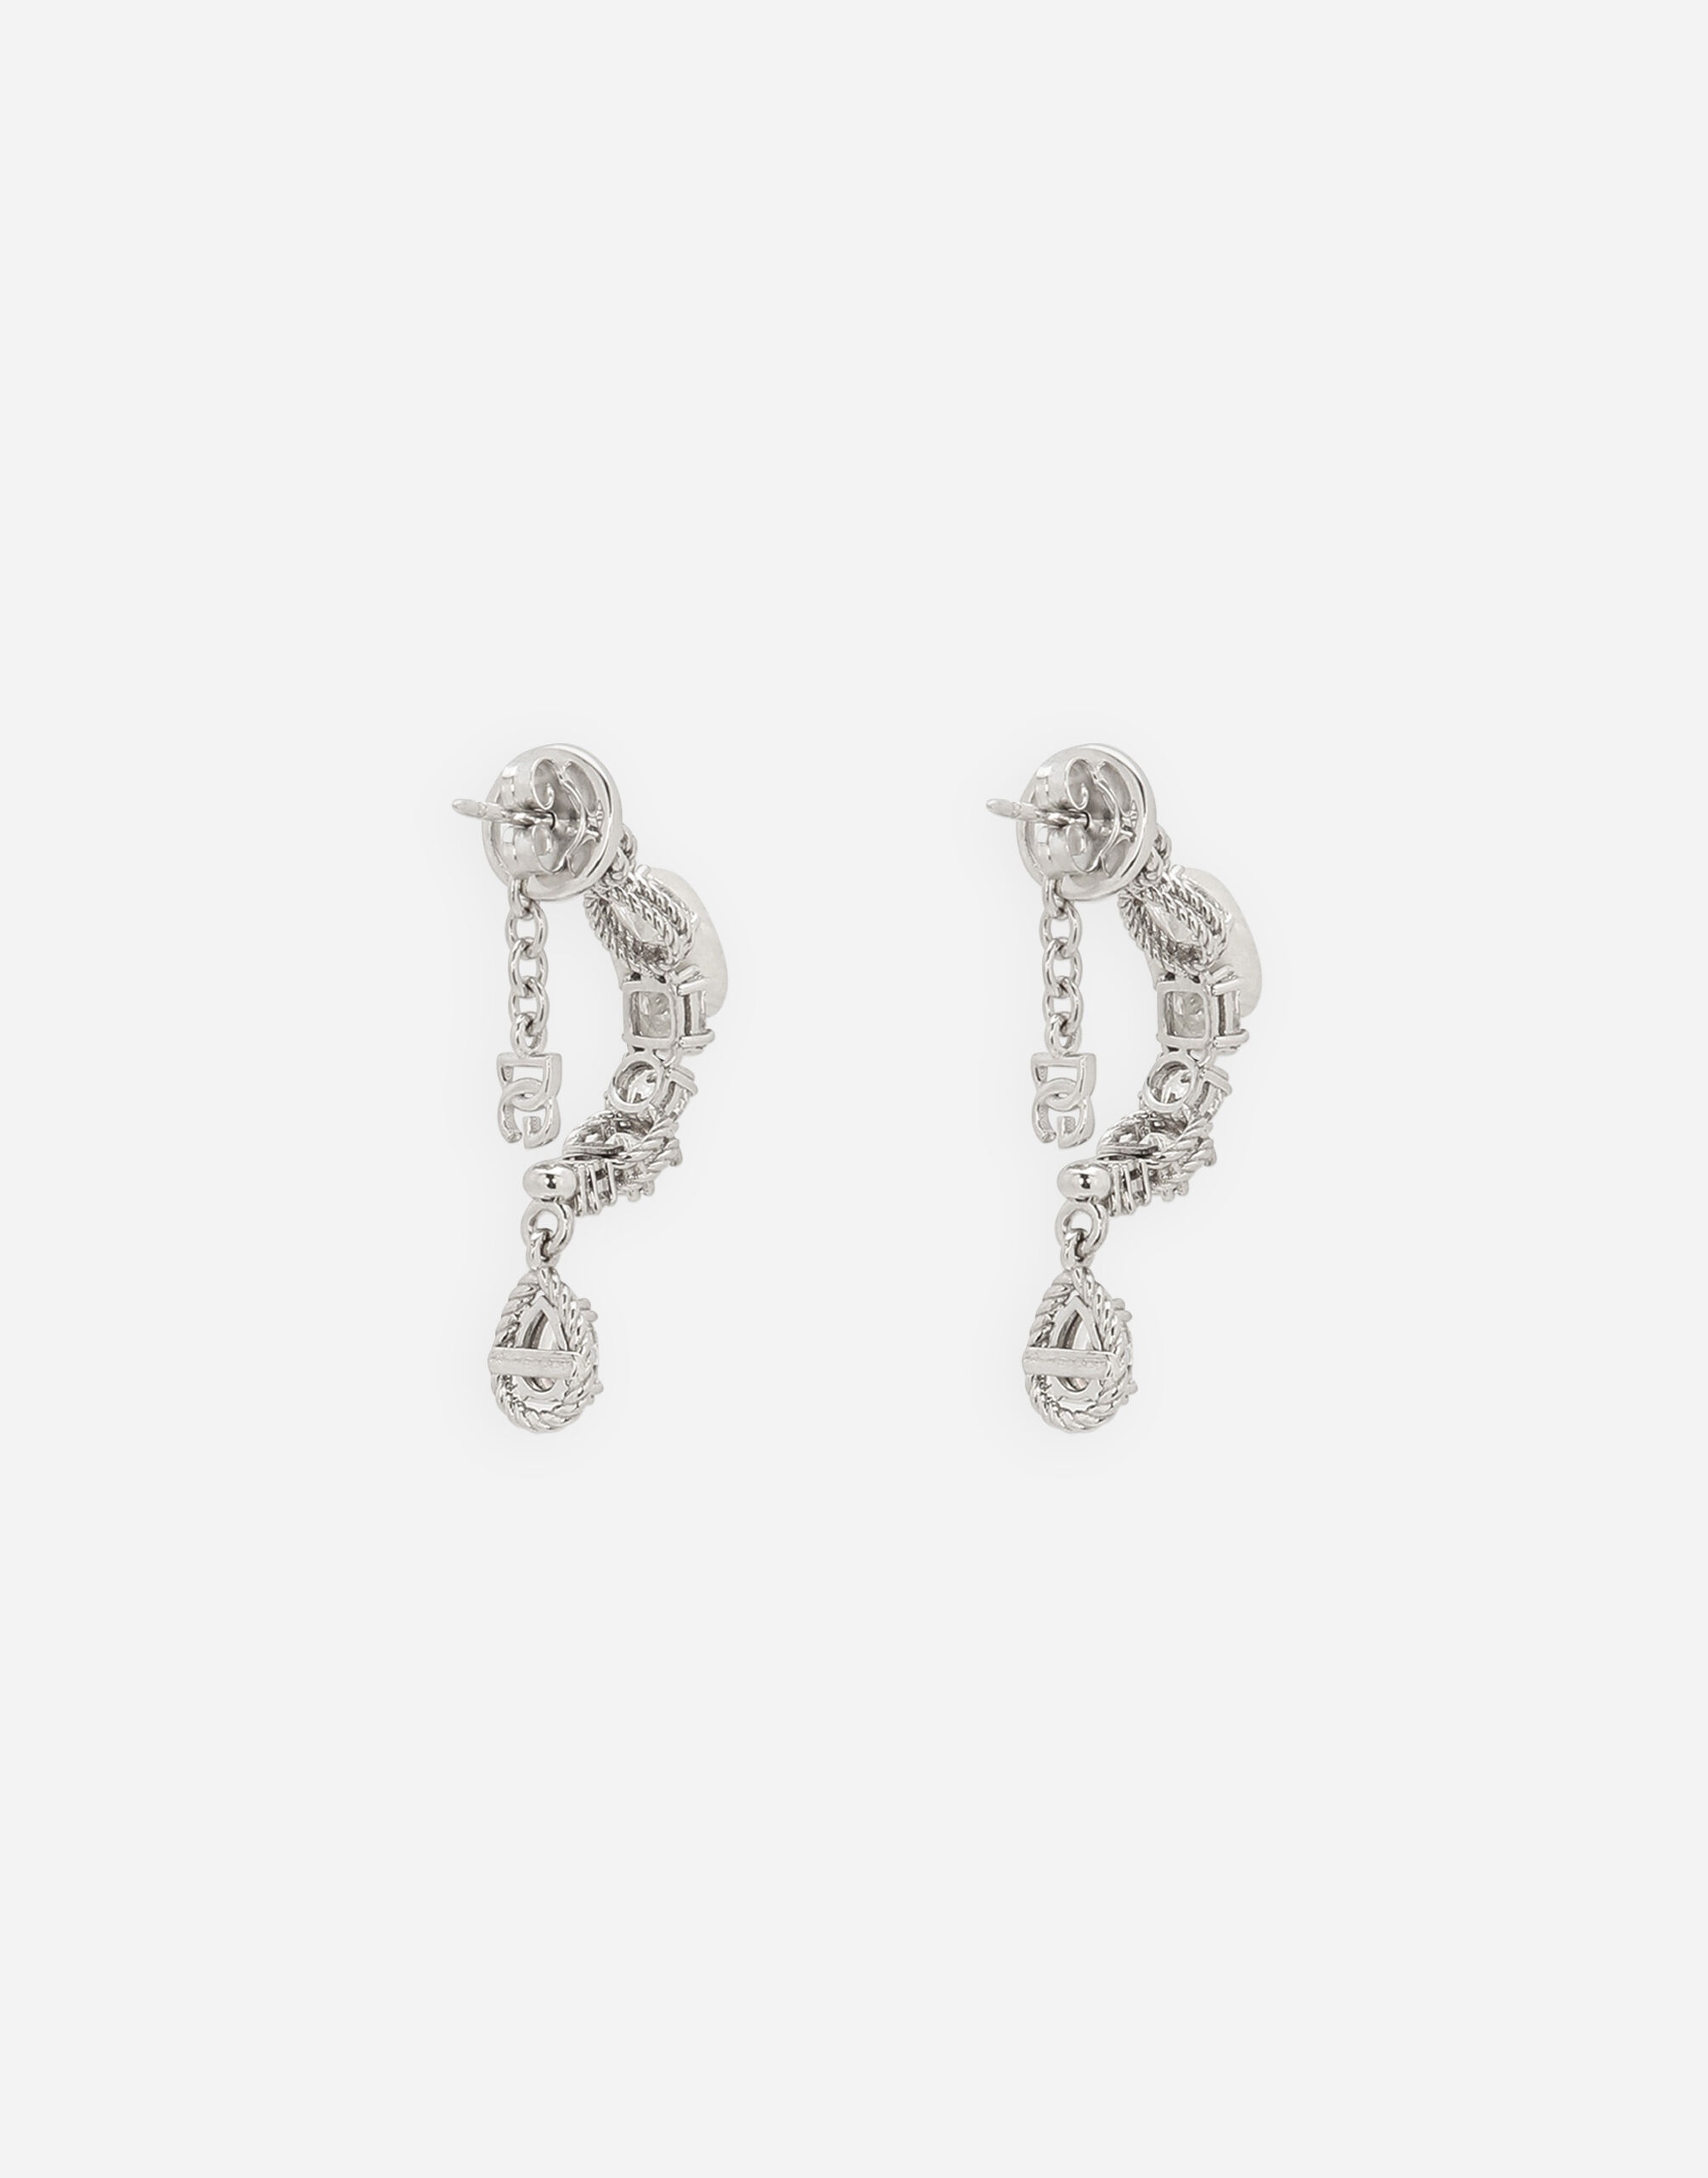 Easy Diamond earrings in white gold 18Kt and diamonds - 3